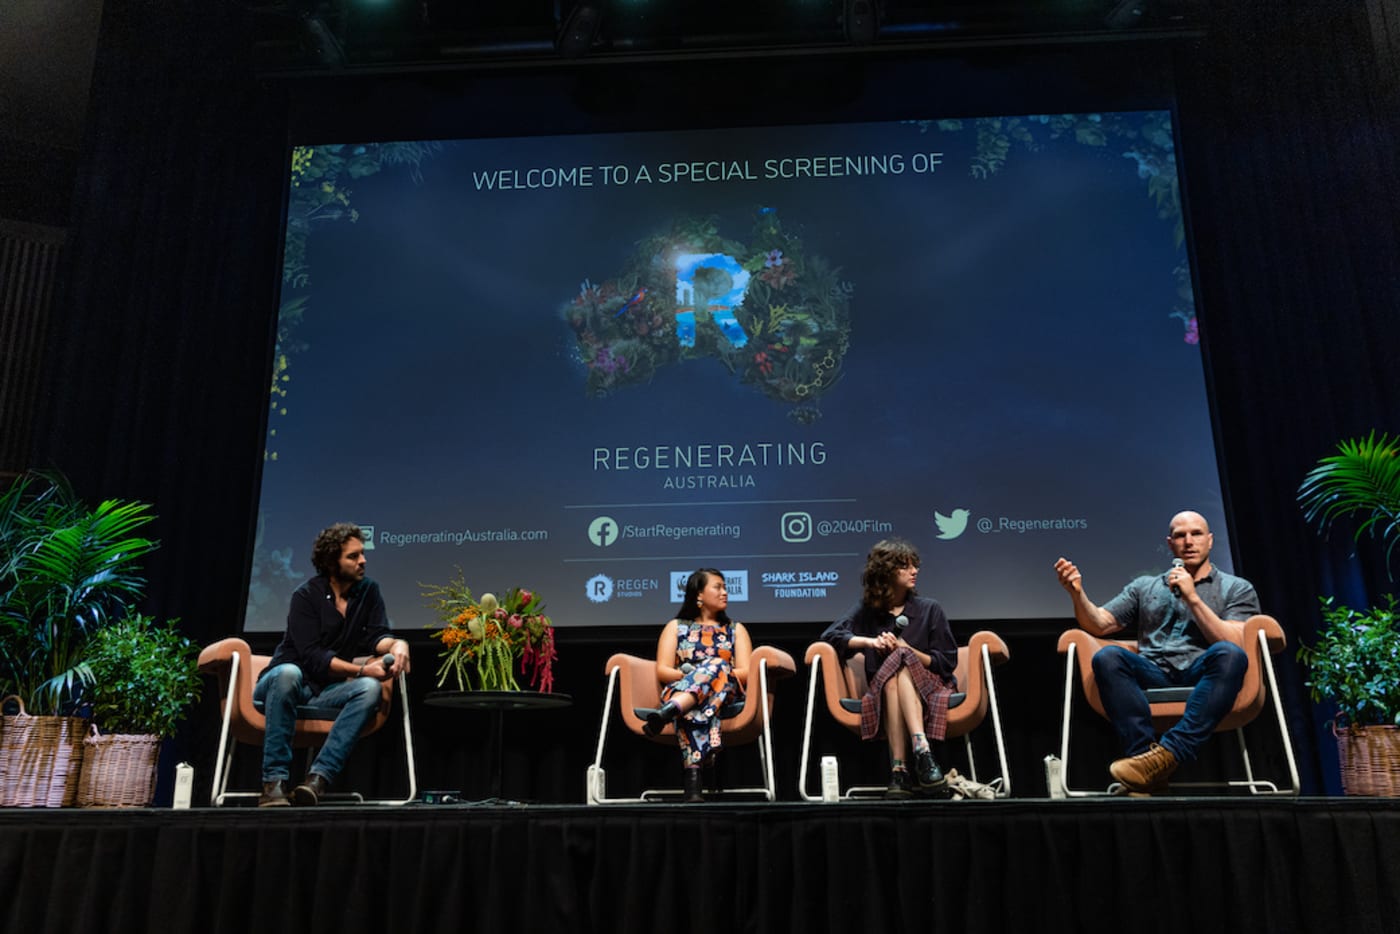 Over 7200 people attended 60 screenings of Regenerating Australia